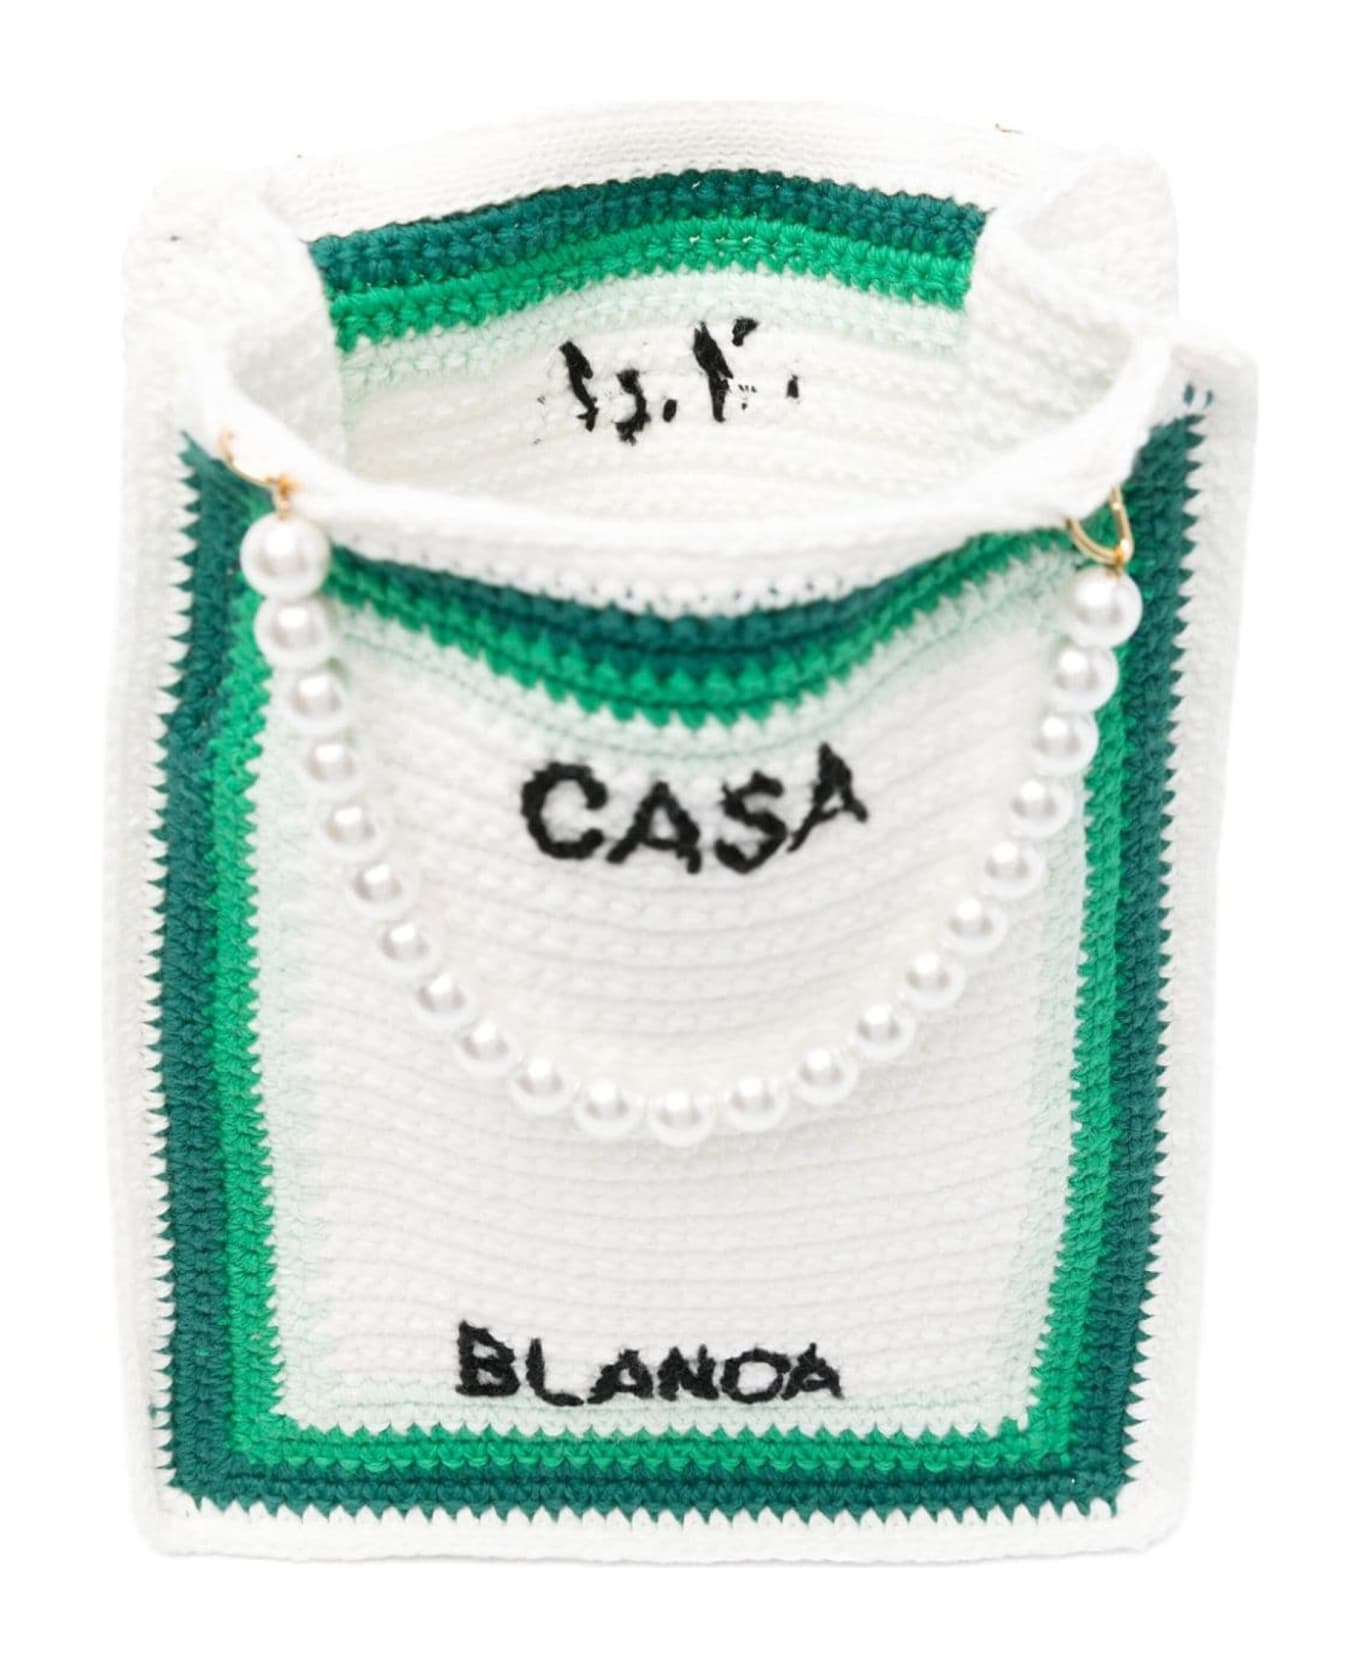 Casablanca White And Green Cotton Tote Bag - Neutro バッグ